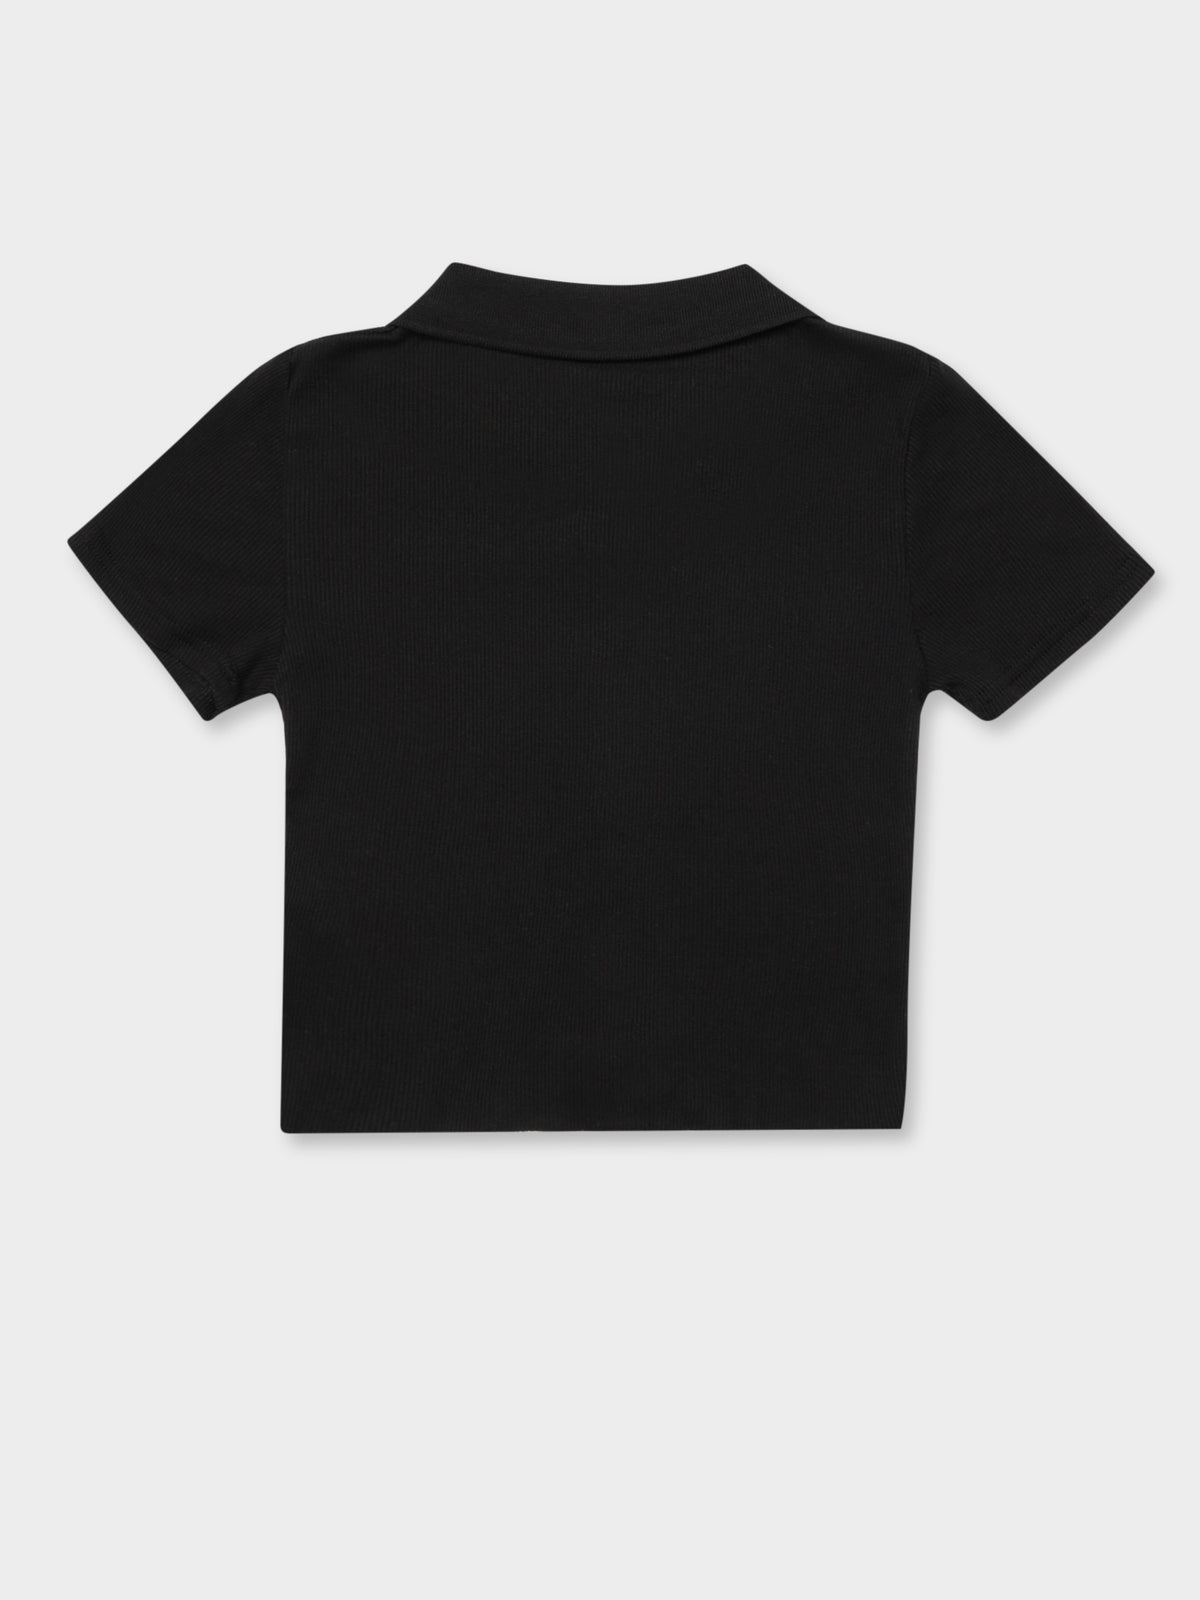 Markham Rib T-Shirt in Black